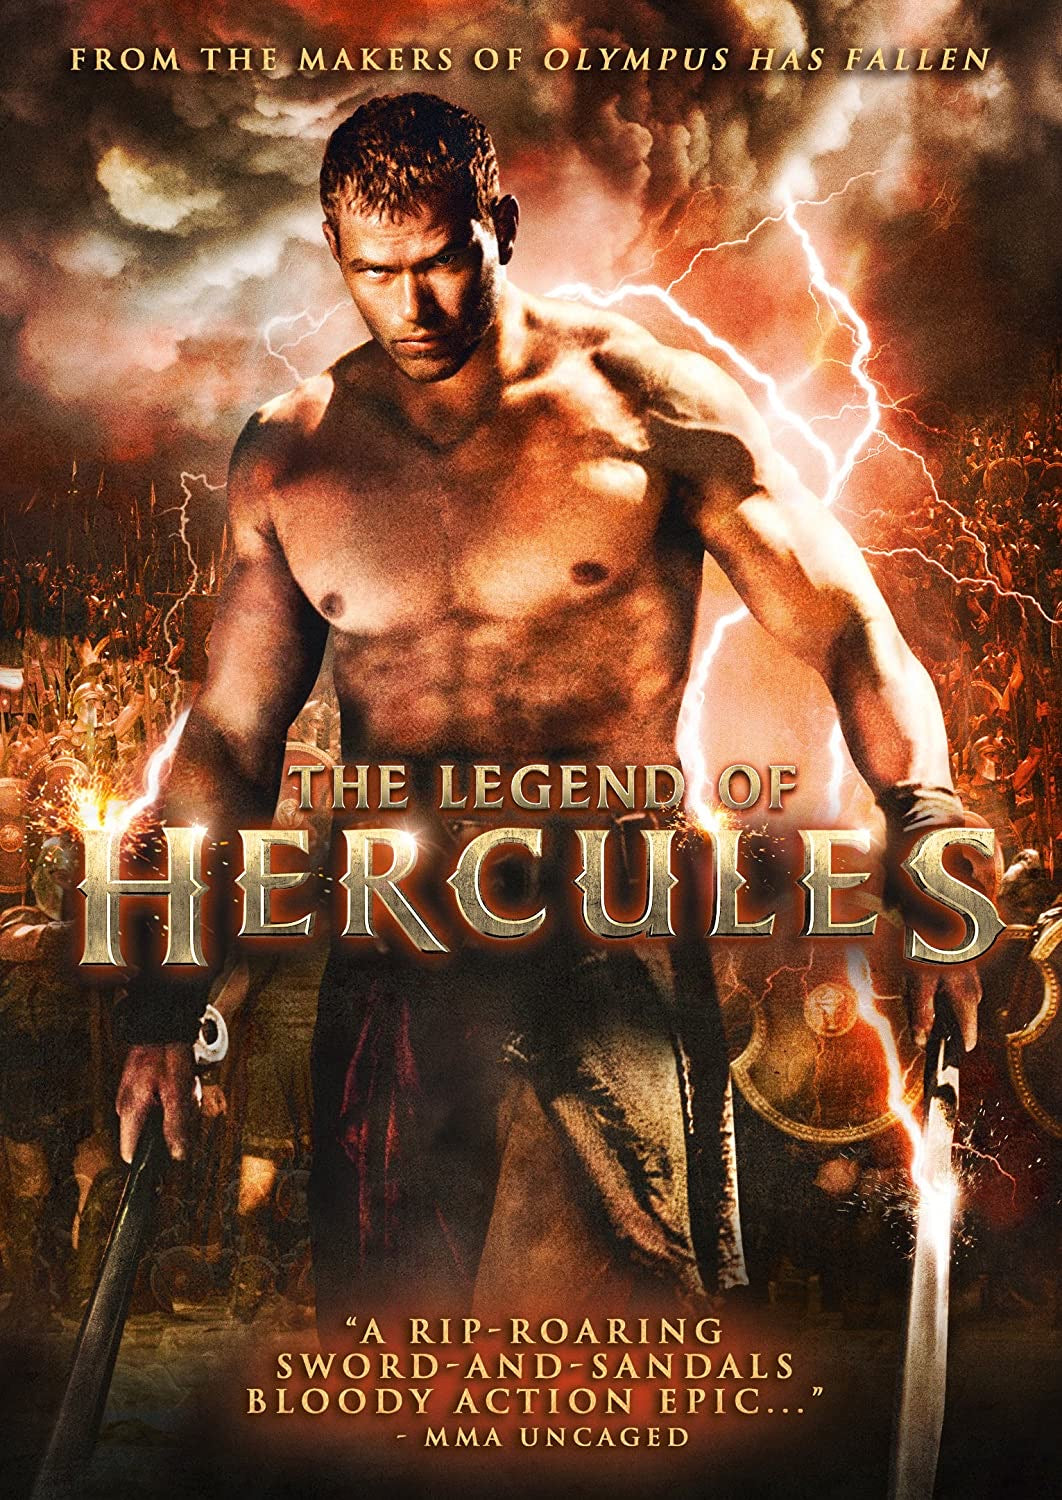 The Legend of Hercules (2014) Vudu HD redemption only